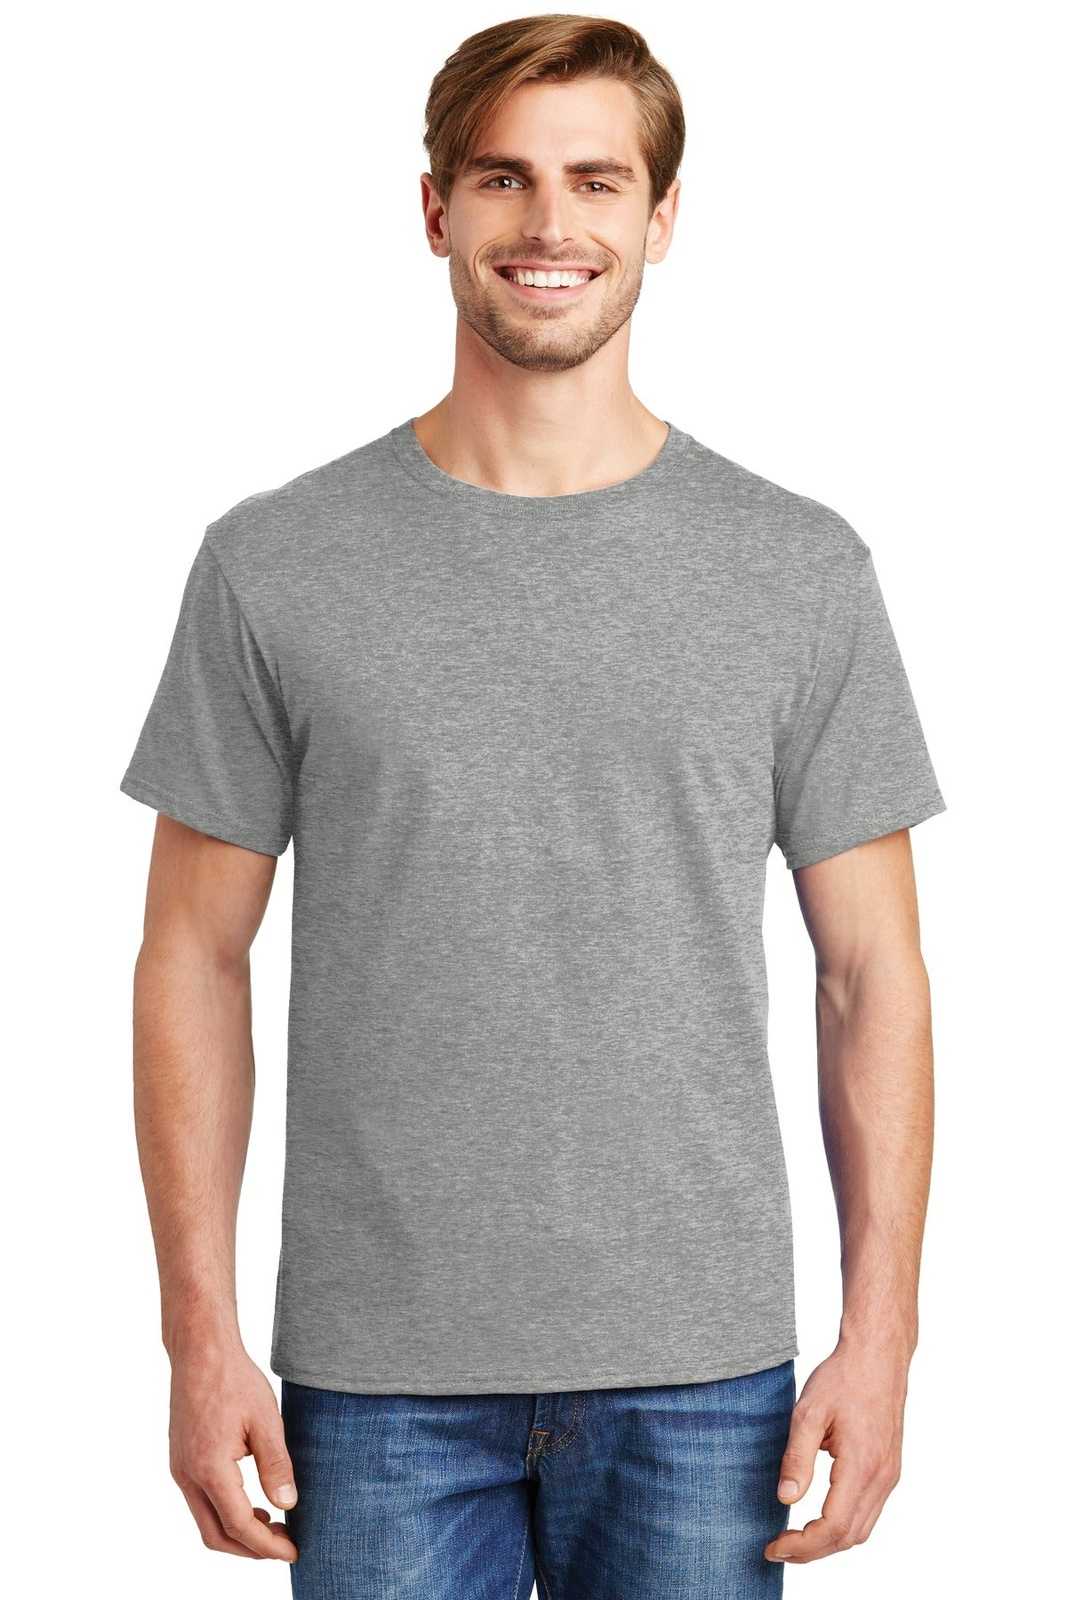 Hanes 5280 Comfortsoft 100% Cotton T-Shirt - Light Steel - HIT a Double